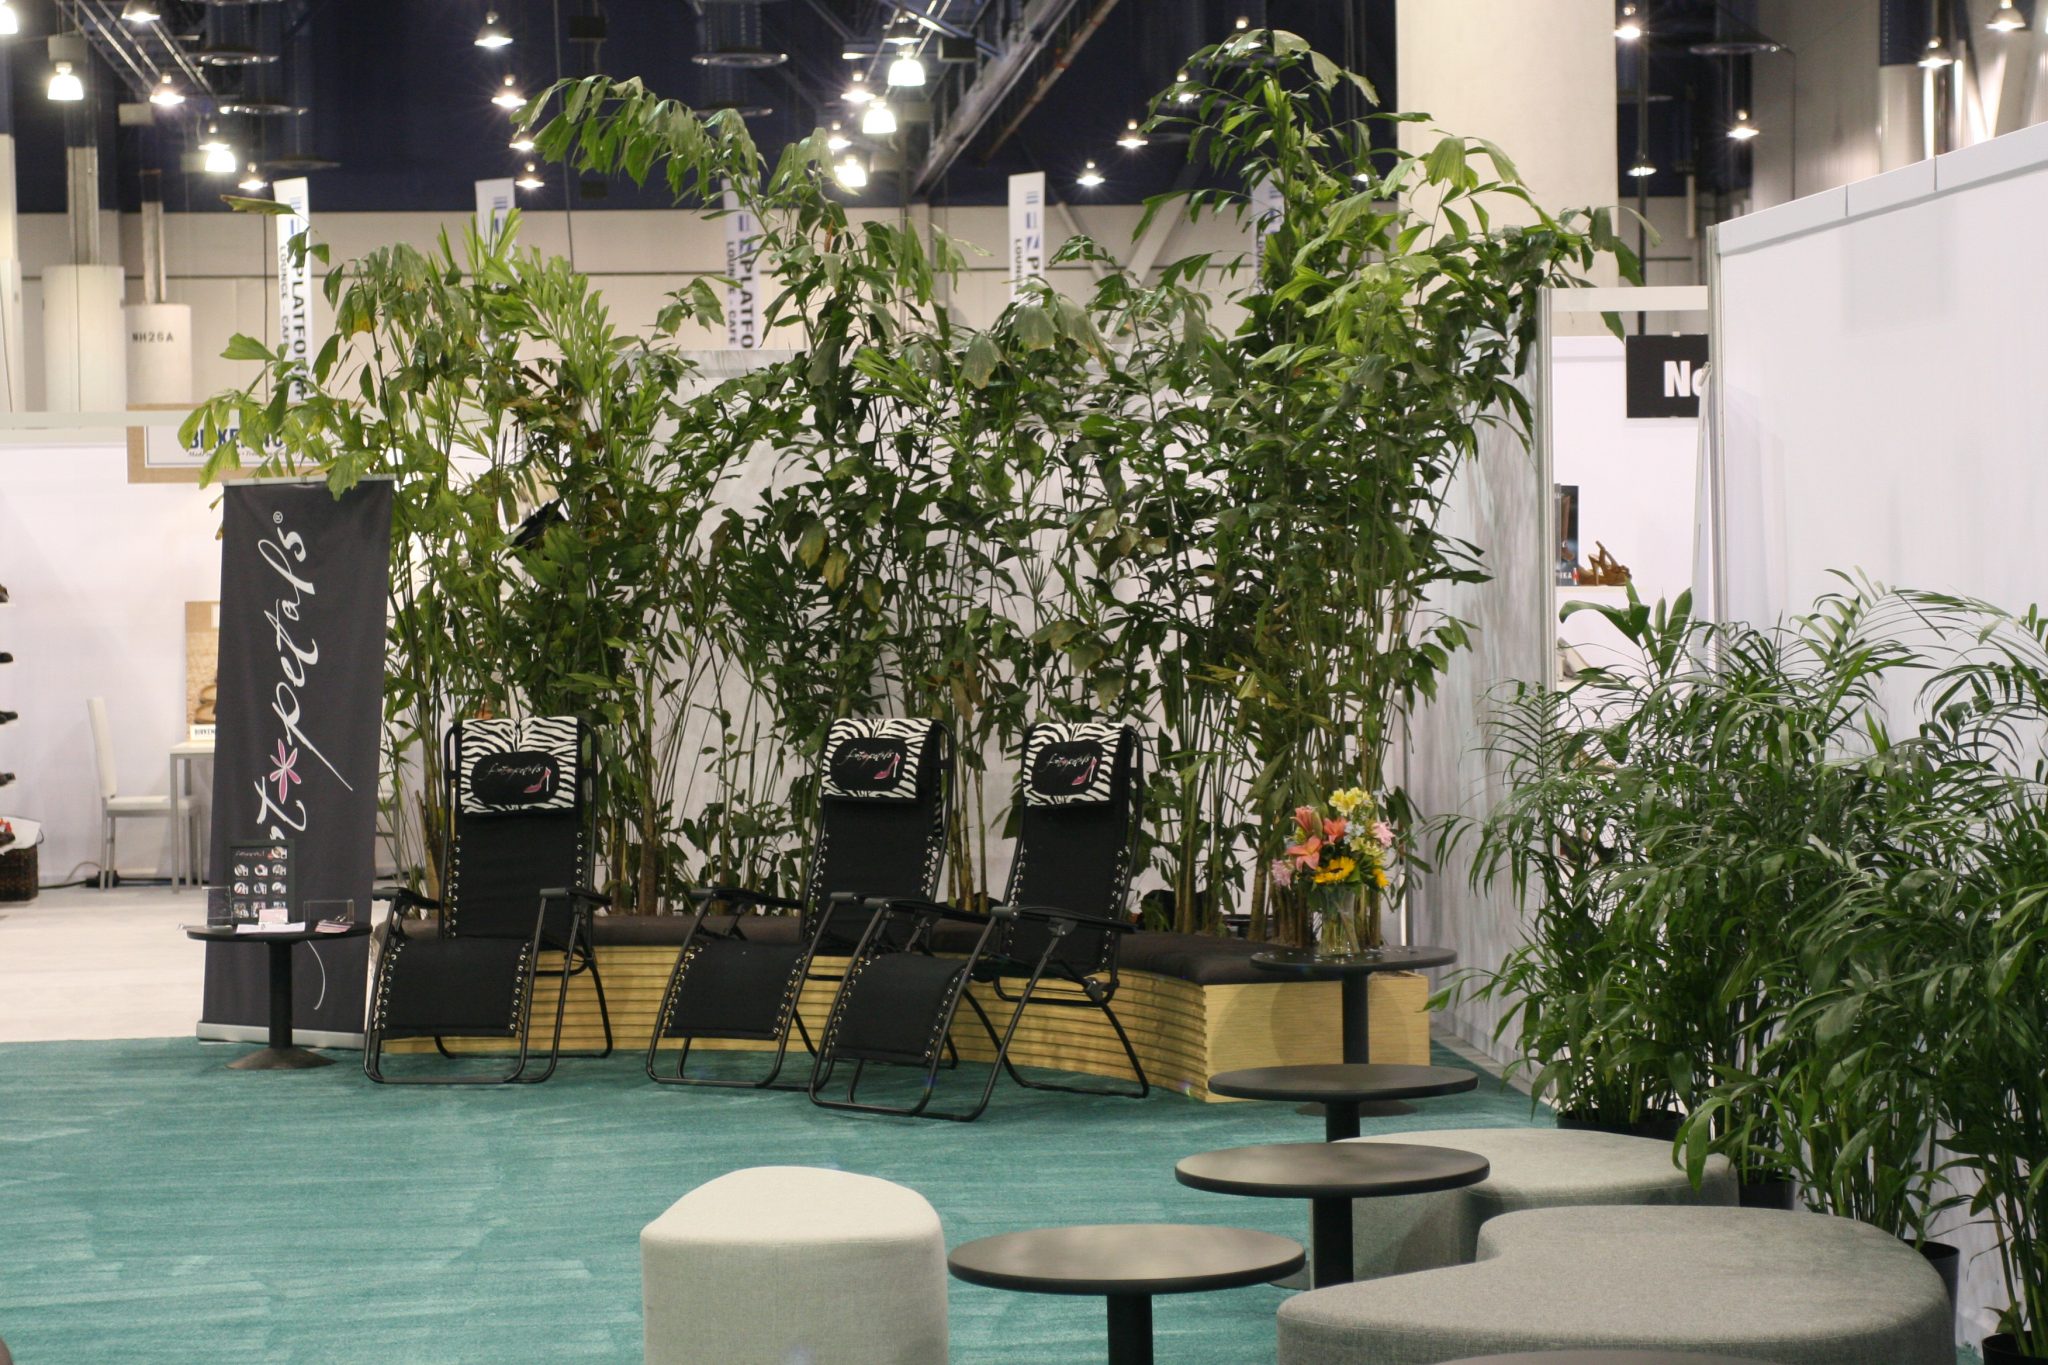 Plant wall for las vegas conferences.